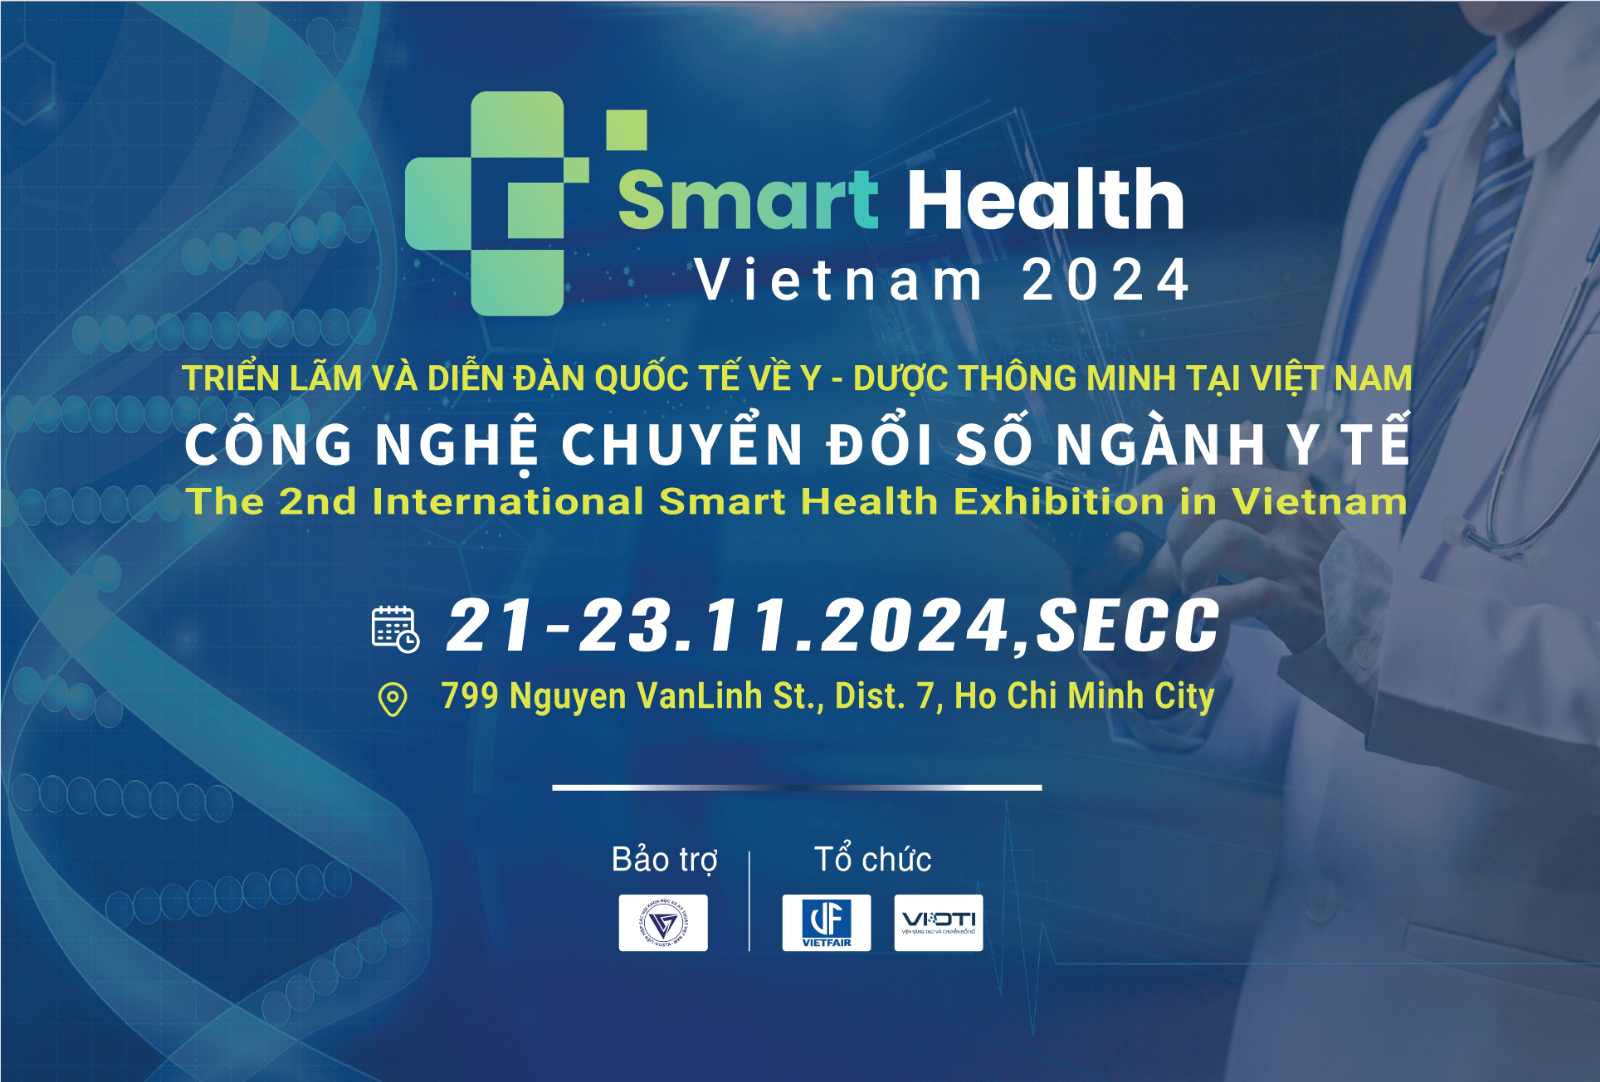 The International Smart Health Exhibition in Vietnam - SMART HEALTH 2024